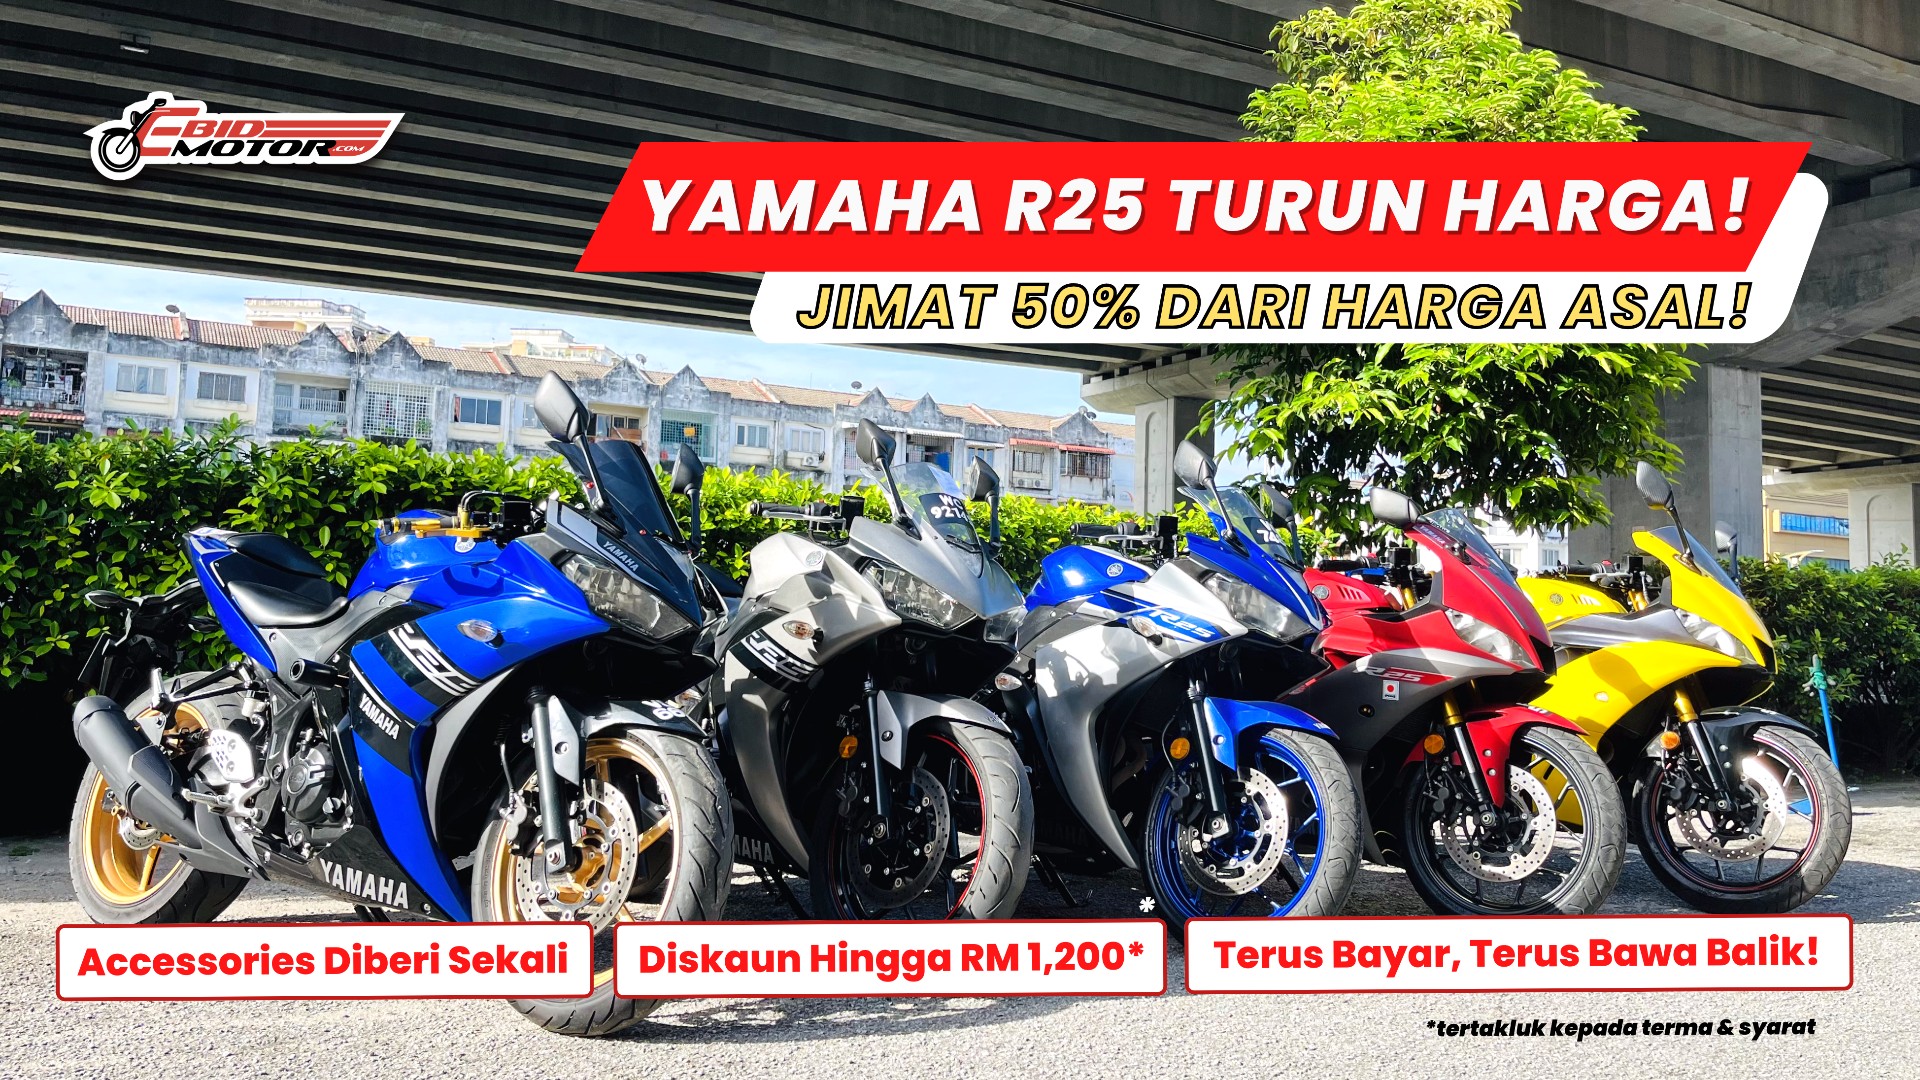 Yamaha R25 Full Standard & Full Accessories, Semua Ada! Bulanan Dari RM160 Je!